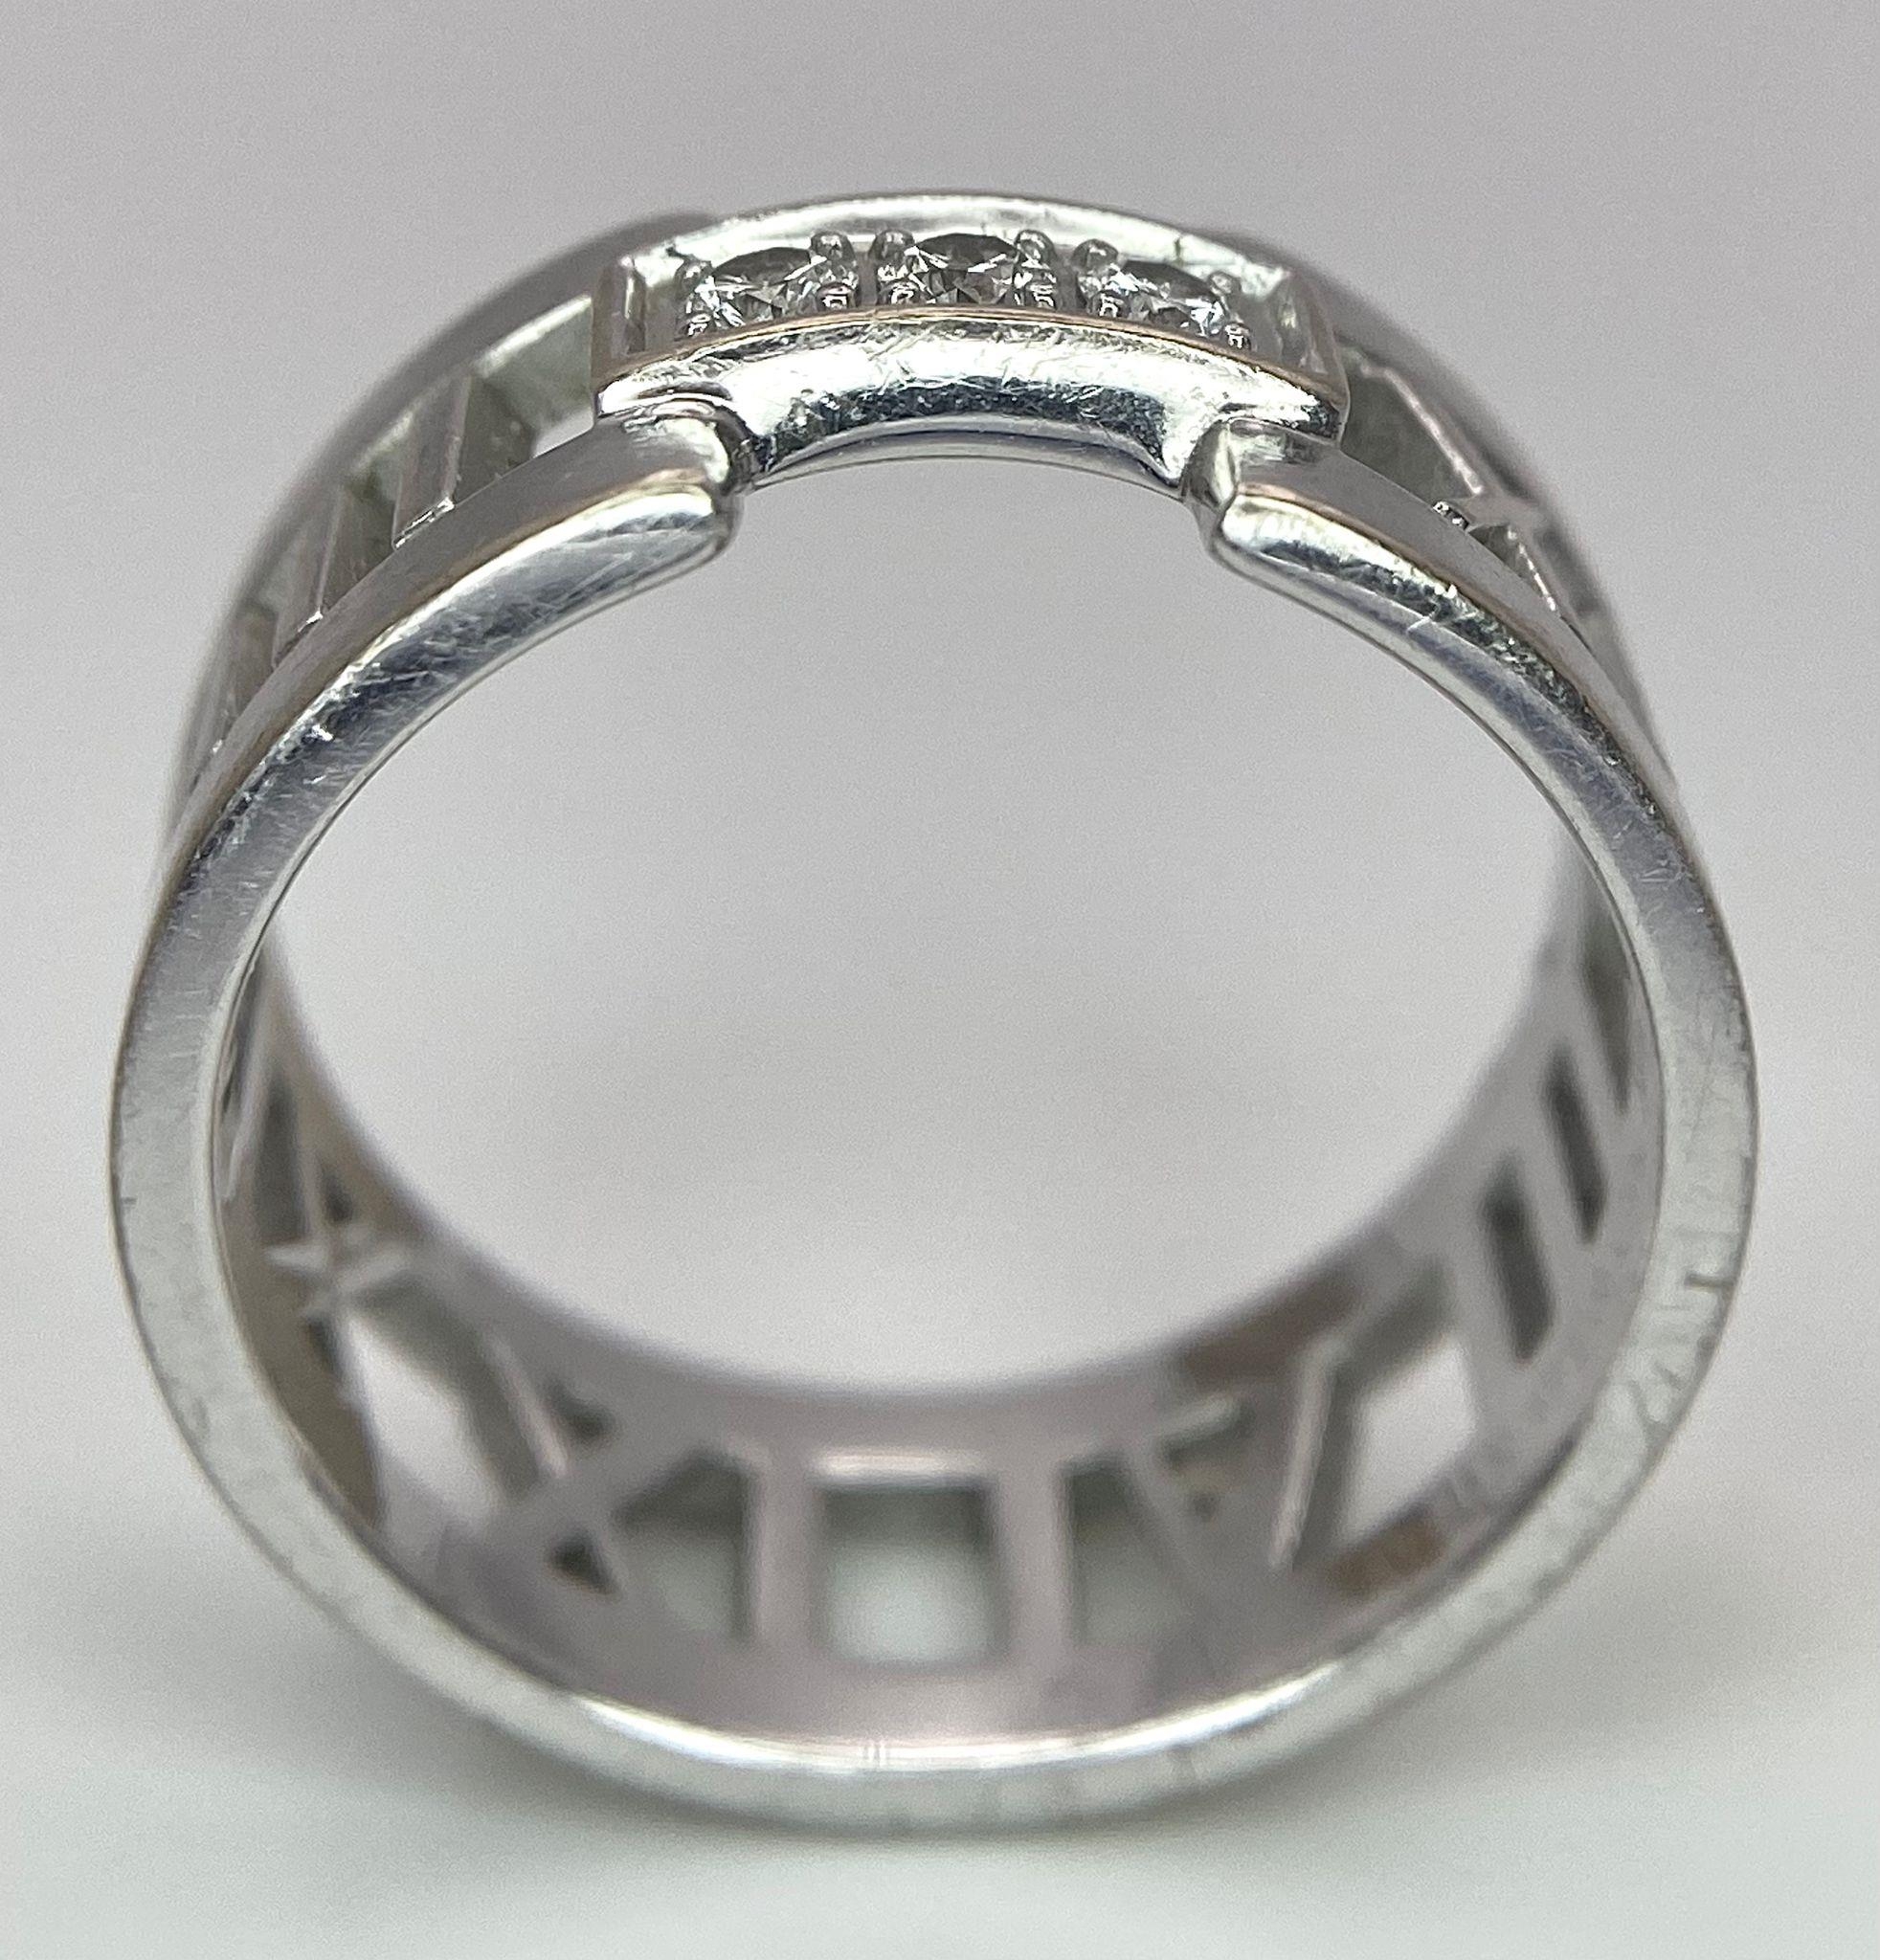 An 18K White Gold Tiffany Atlas Diamond Ring. Pierced Roman numeral decoration. Tiffany mark. Size - Image 4 of 7